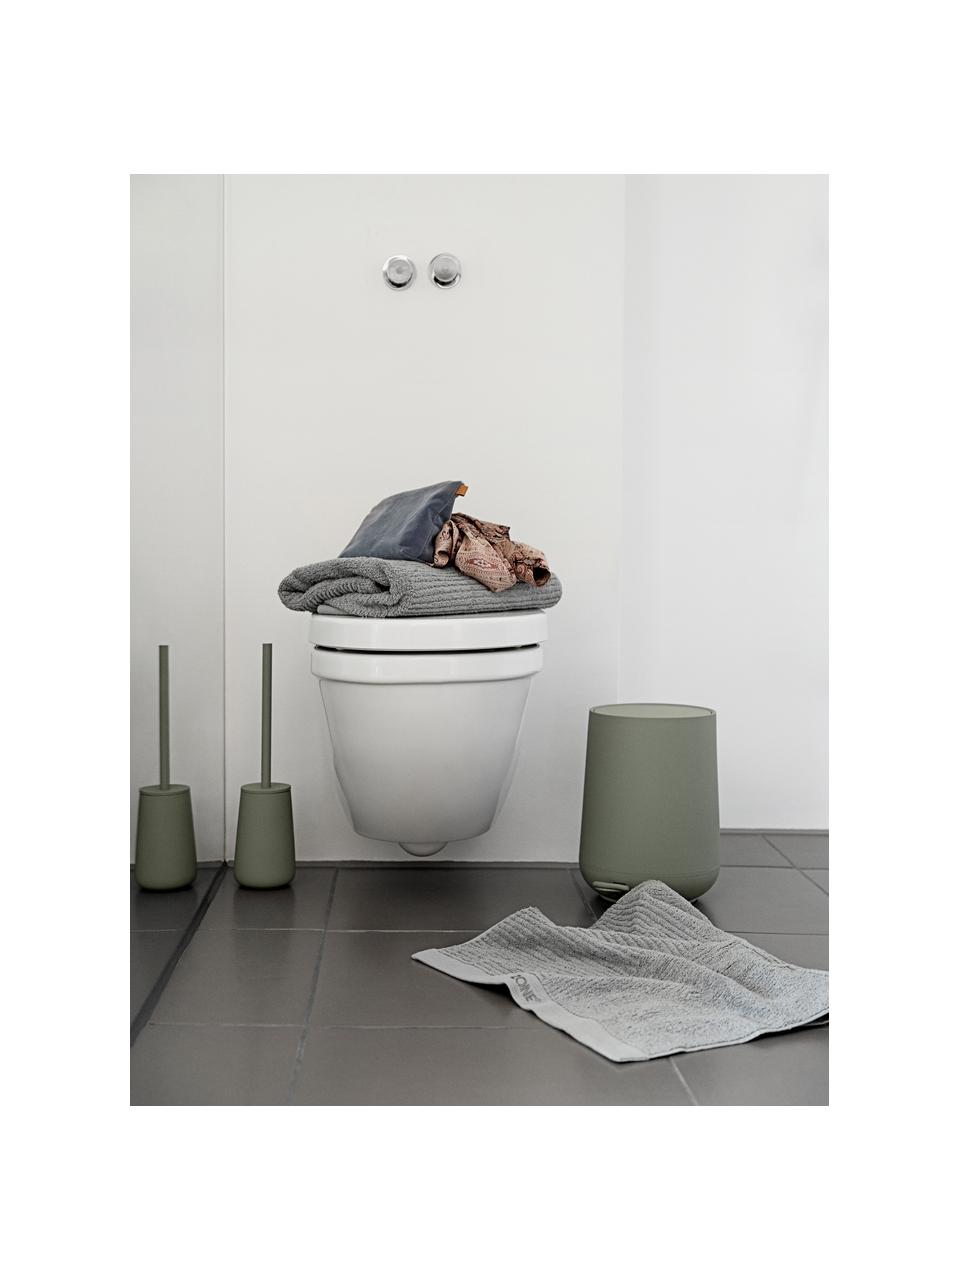 Toilettenbürste Nova mit Porzellan-Behälter, Behälter: Porzellan, Griff: Edelstahl, matt lackiert, Mintgrün, Ø 10 x H 37 cm